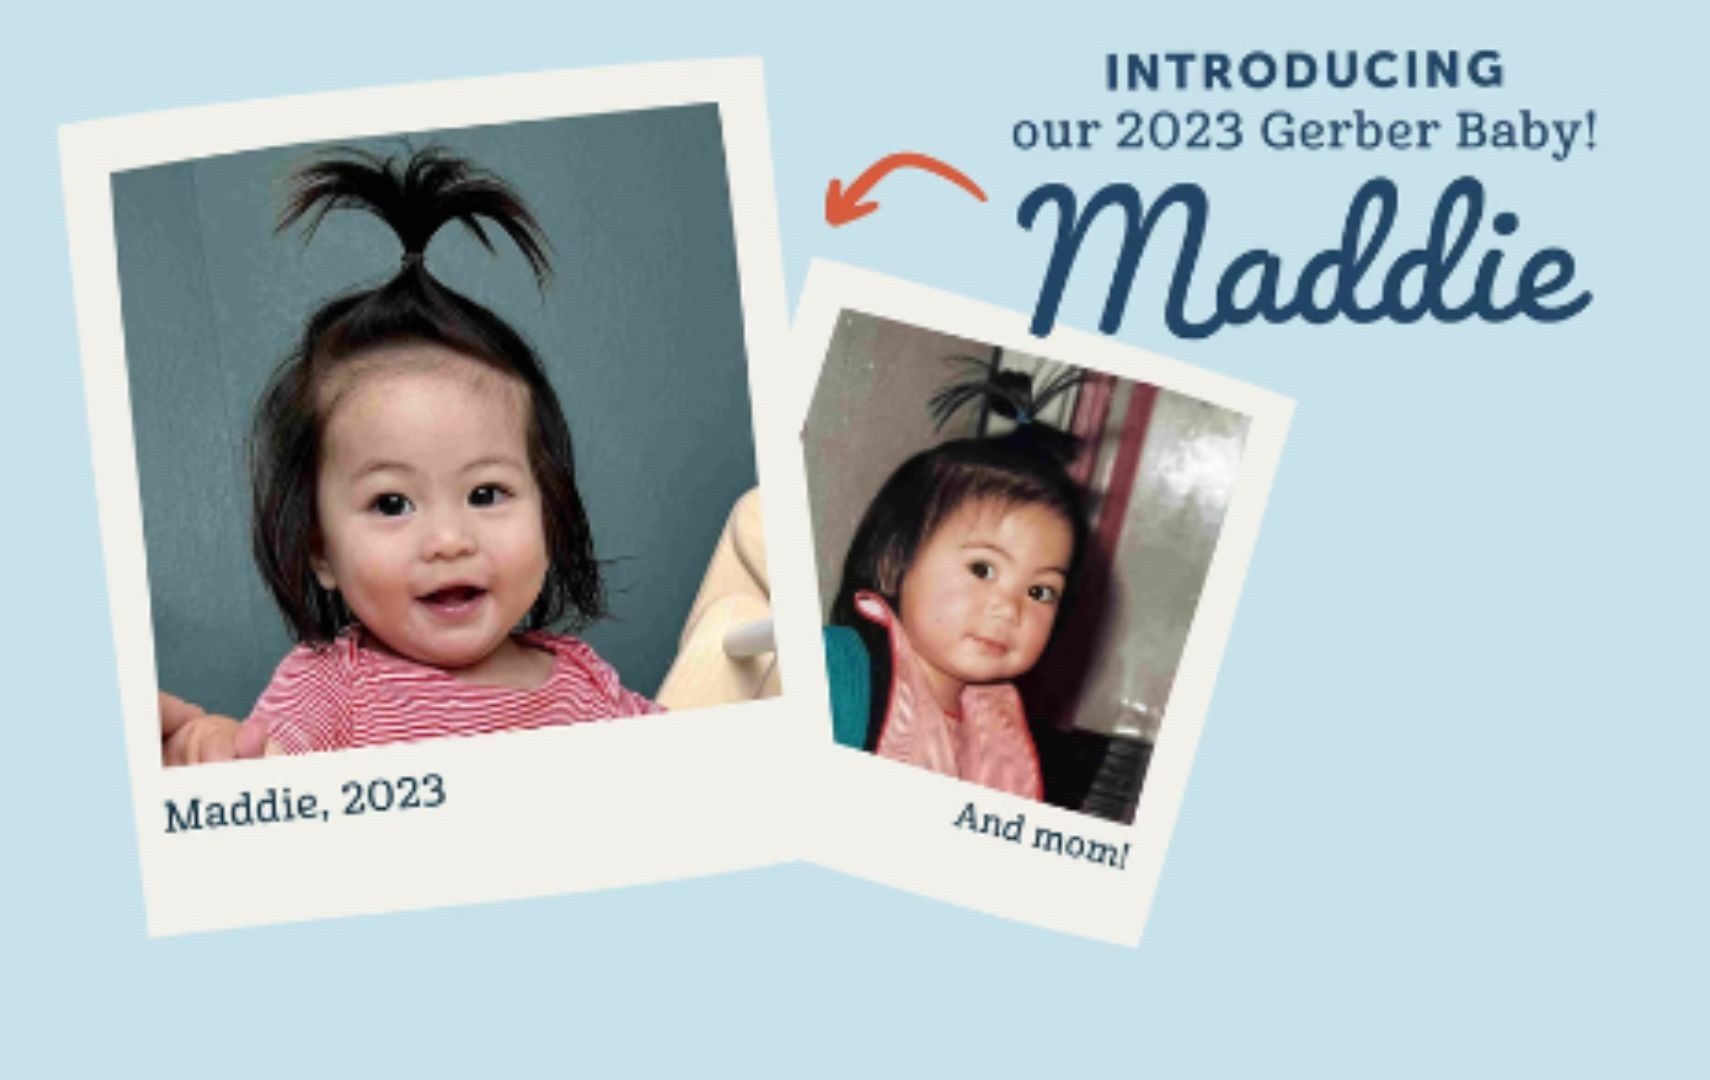 2023 Gerber Baby contest winner is Maddie Mendoza from Colorado